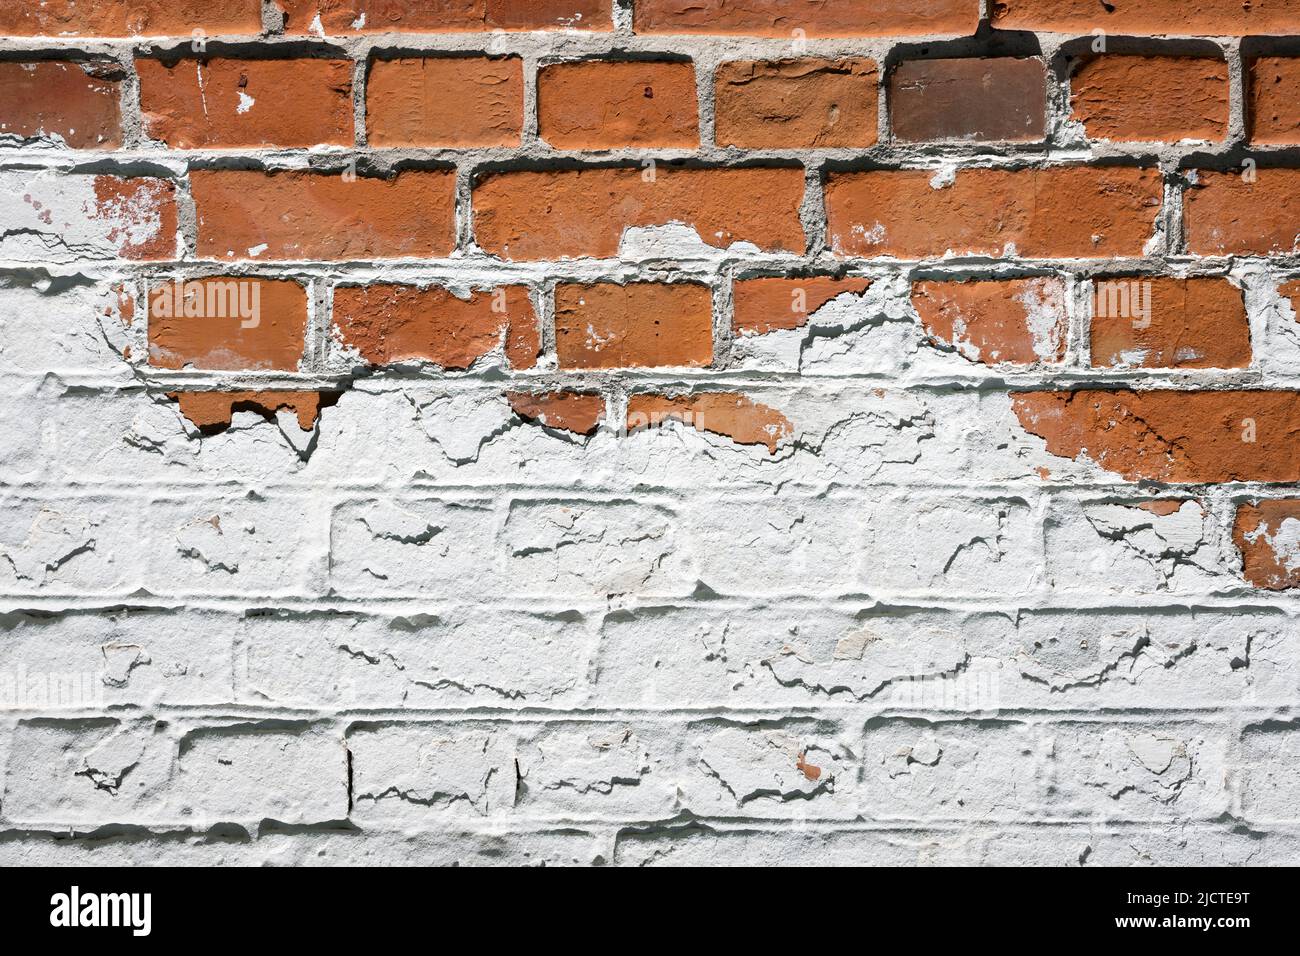 Grunge brick wall background with aging texture closeup. White and orange bricks Stock Photo